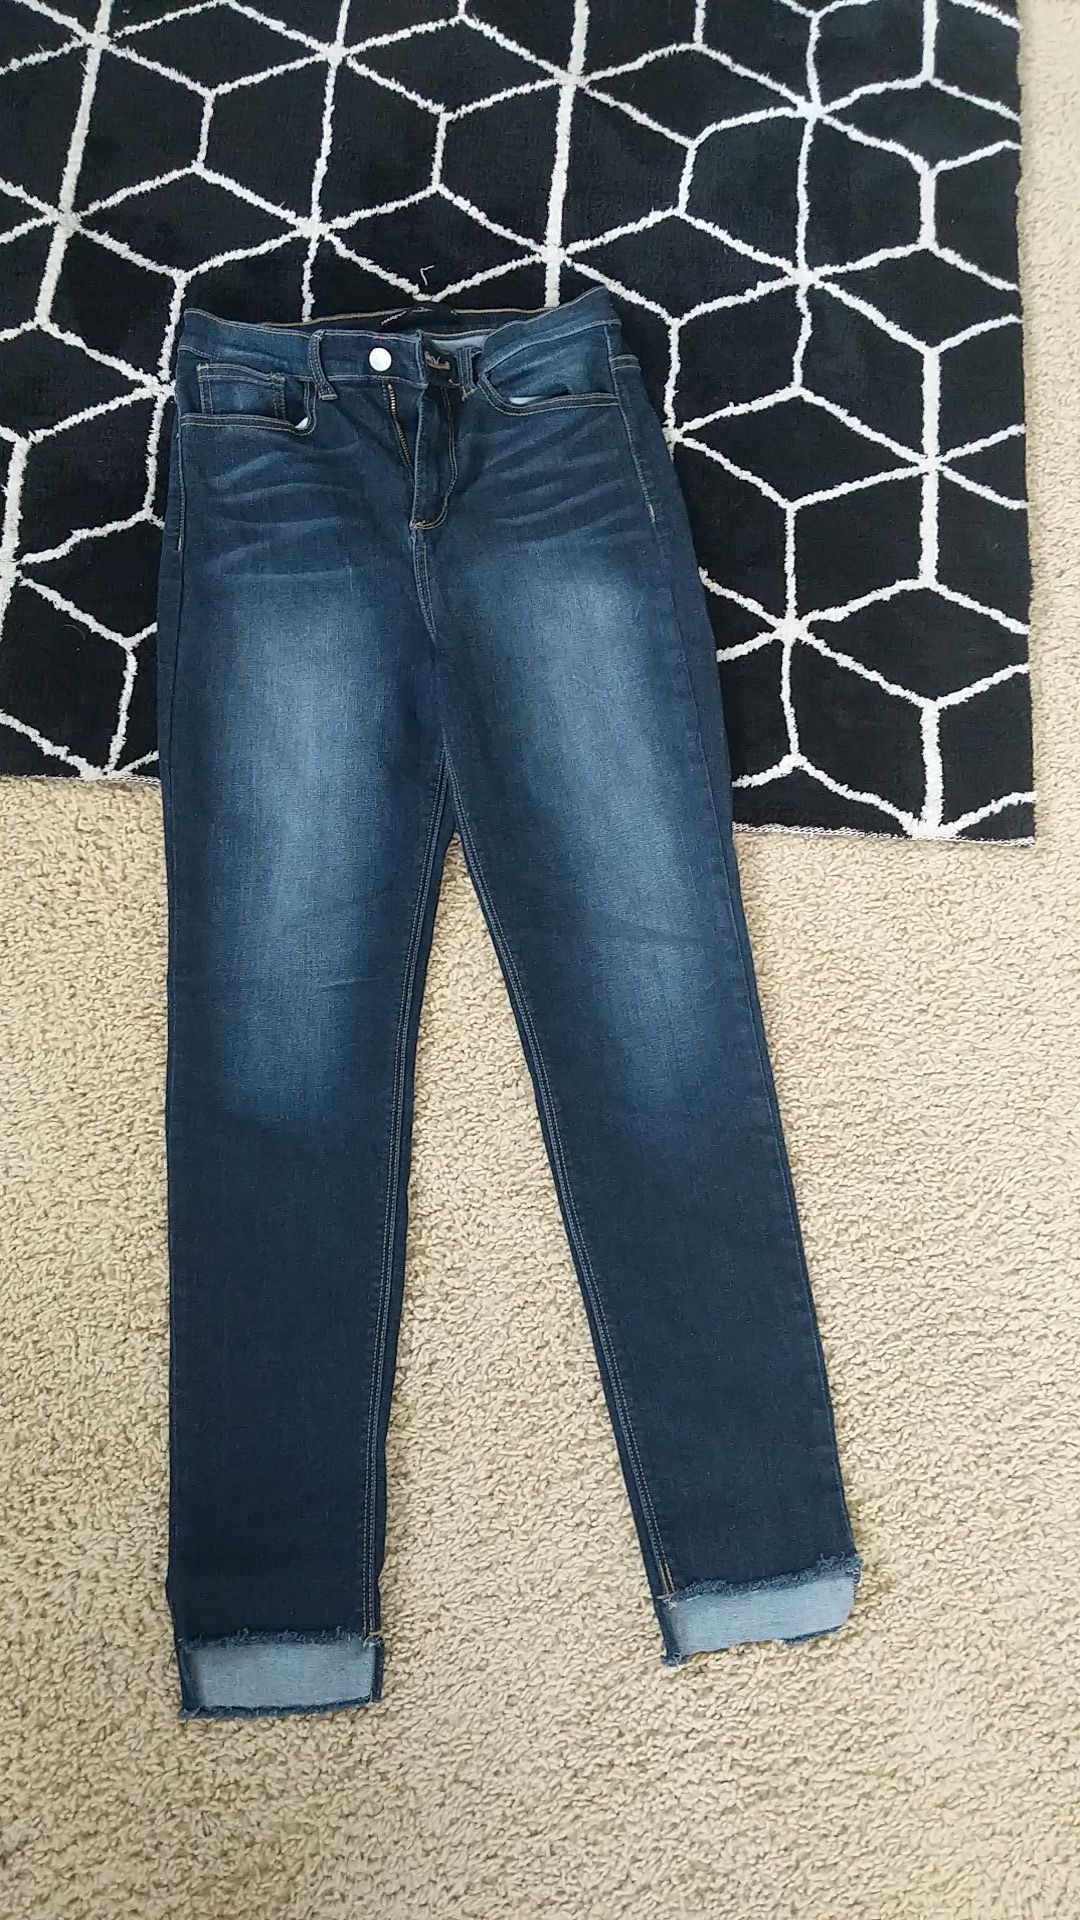 Harper Jeans size 28